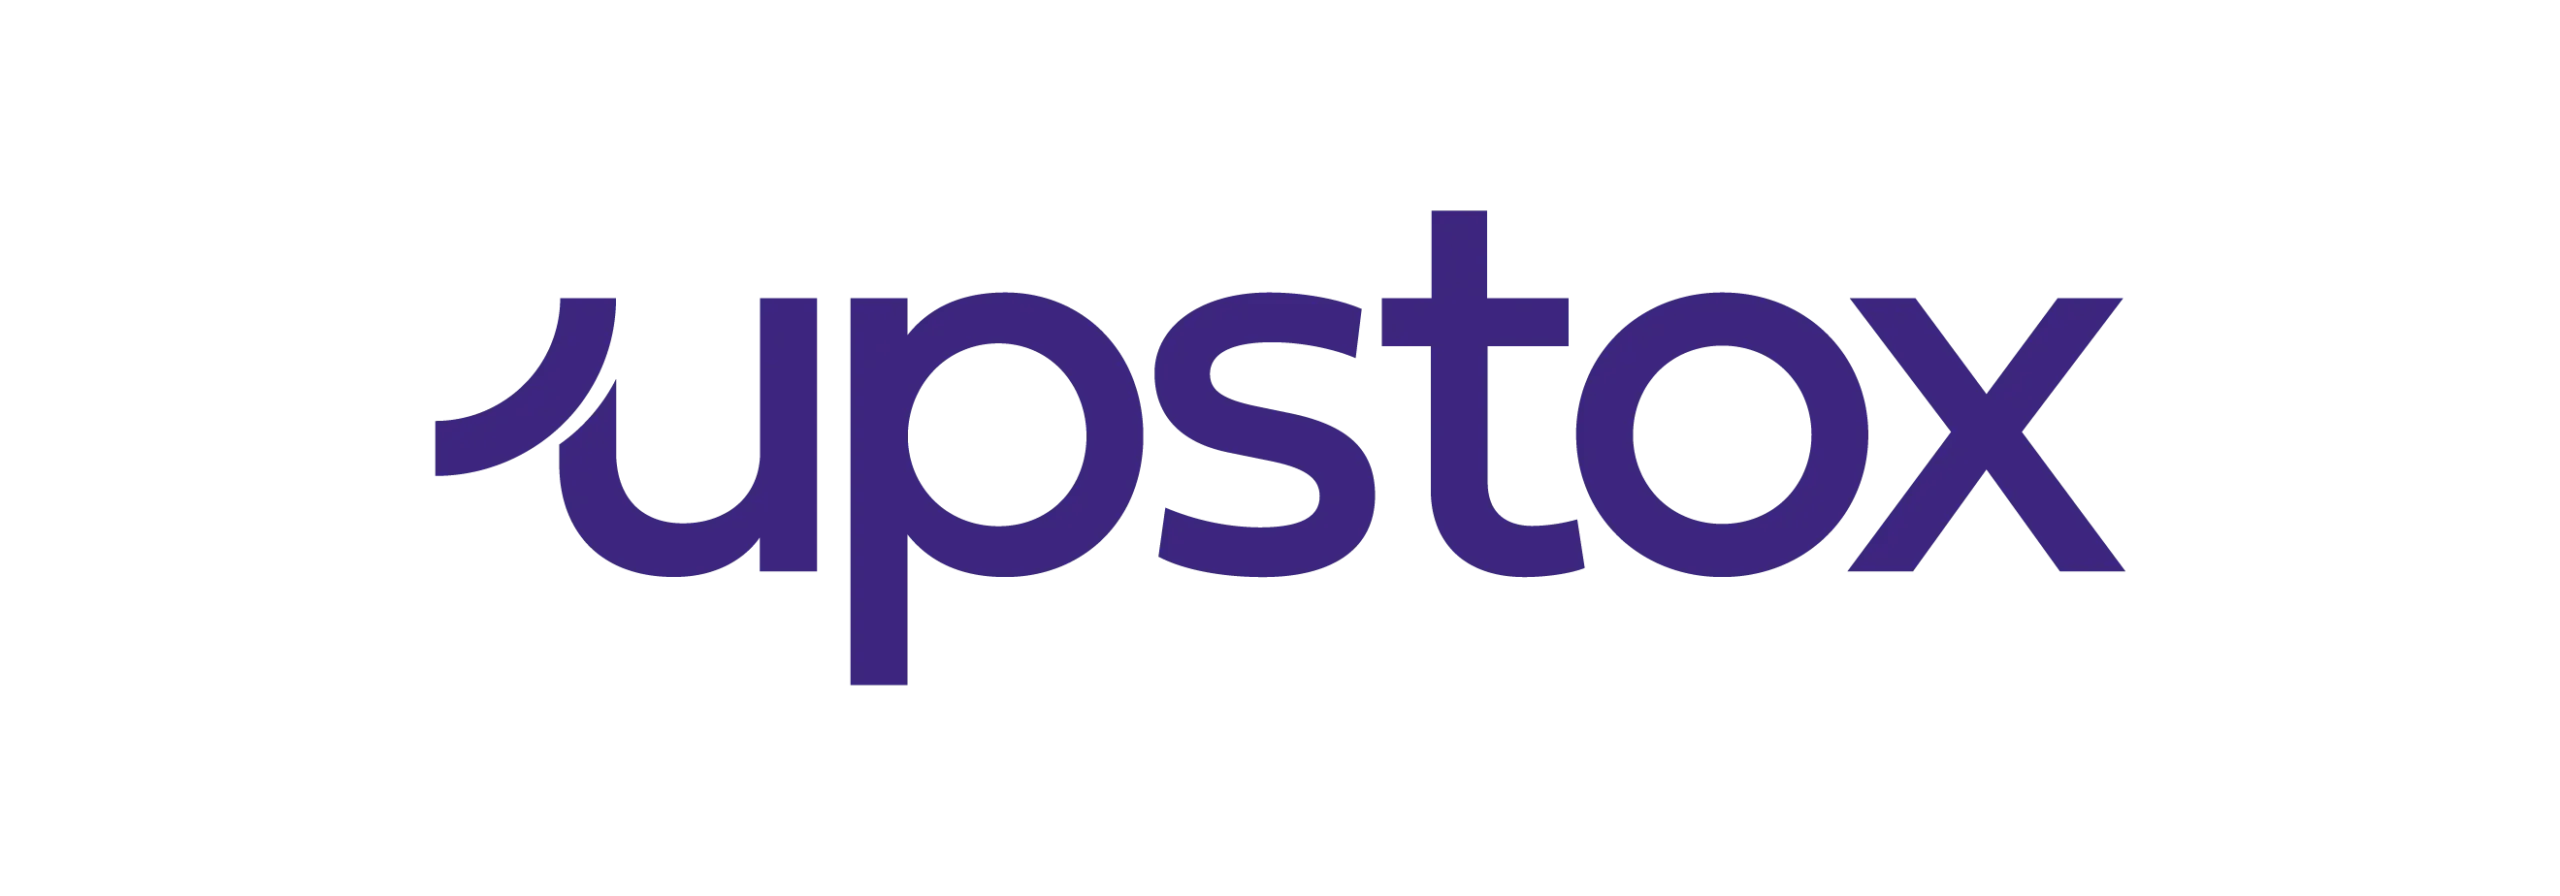 upstox logo